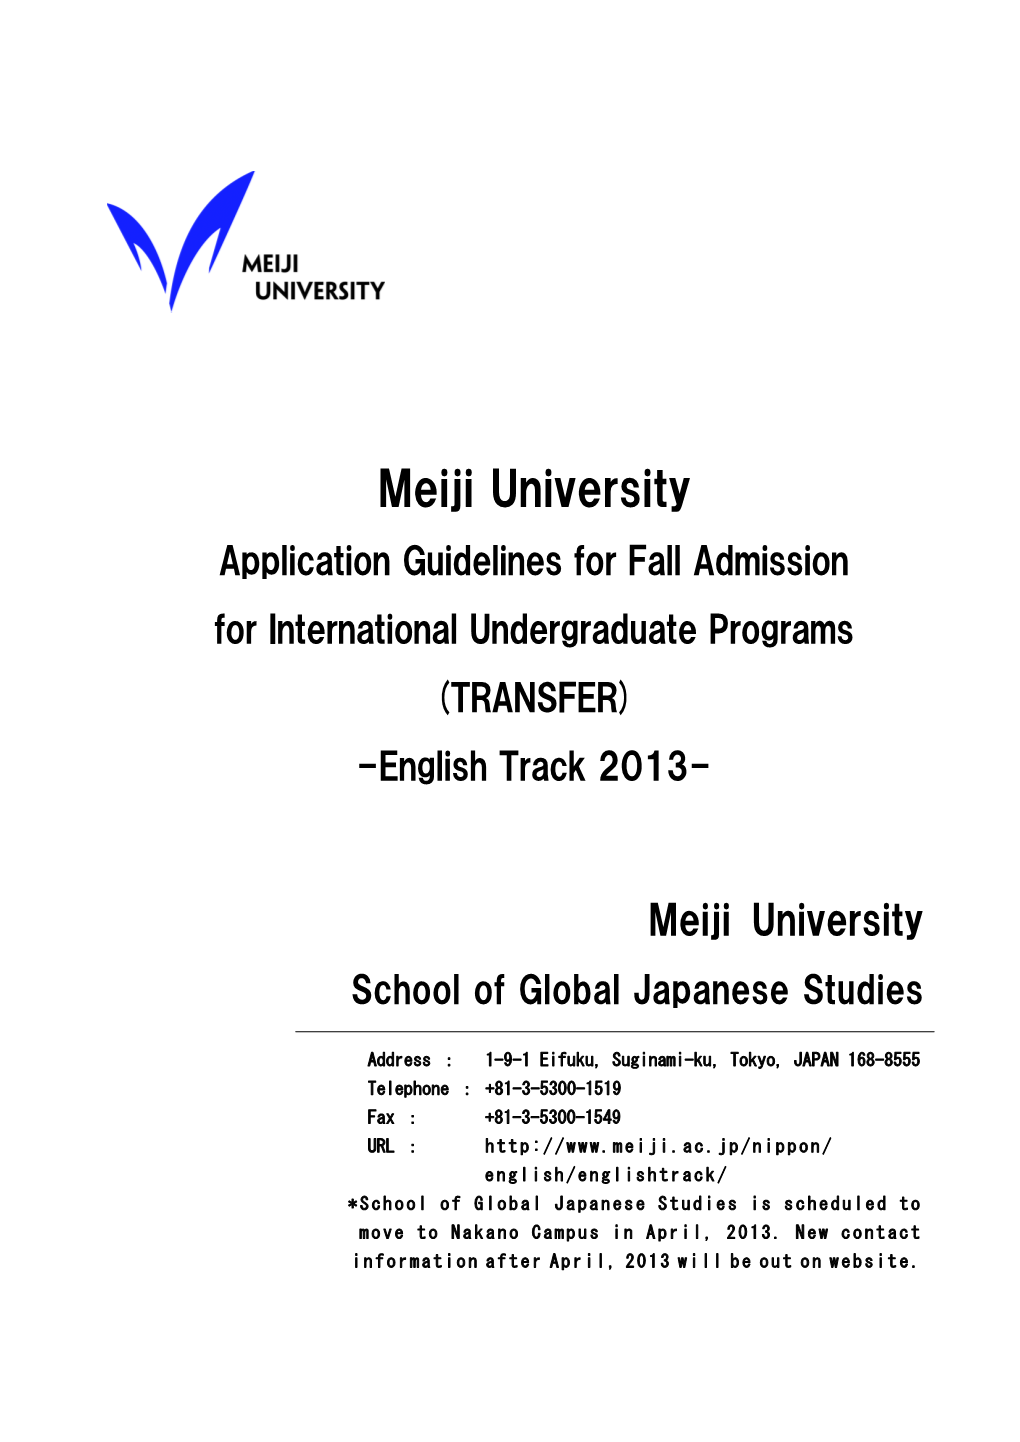 Meiji University Application Guidelines for Fall Admission for International Undergraduate Programs (TRANSFER) -English Track 2013